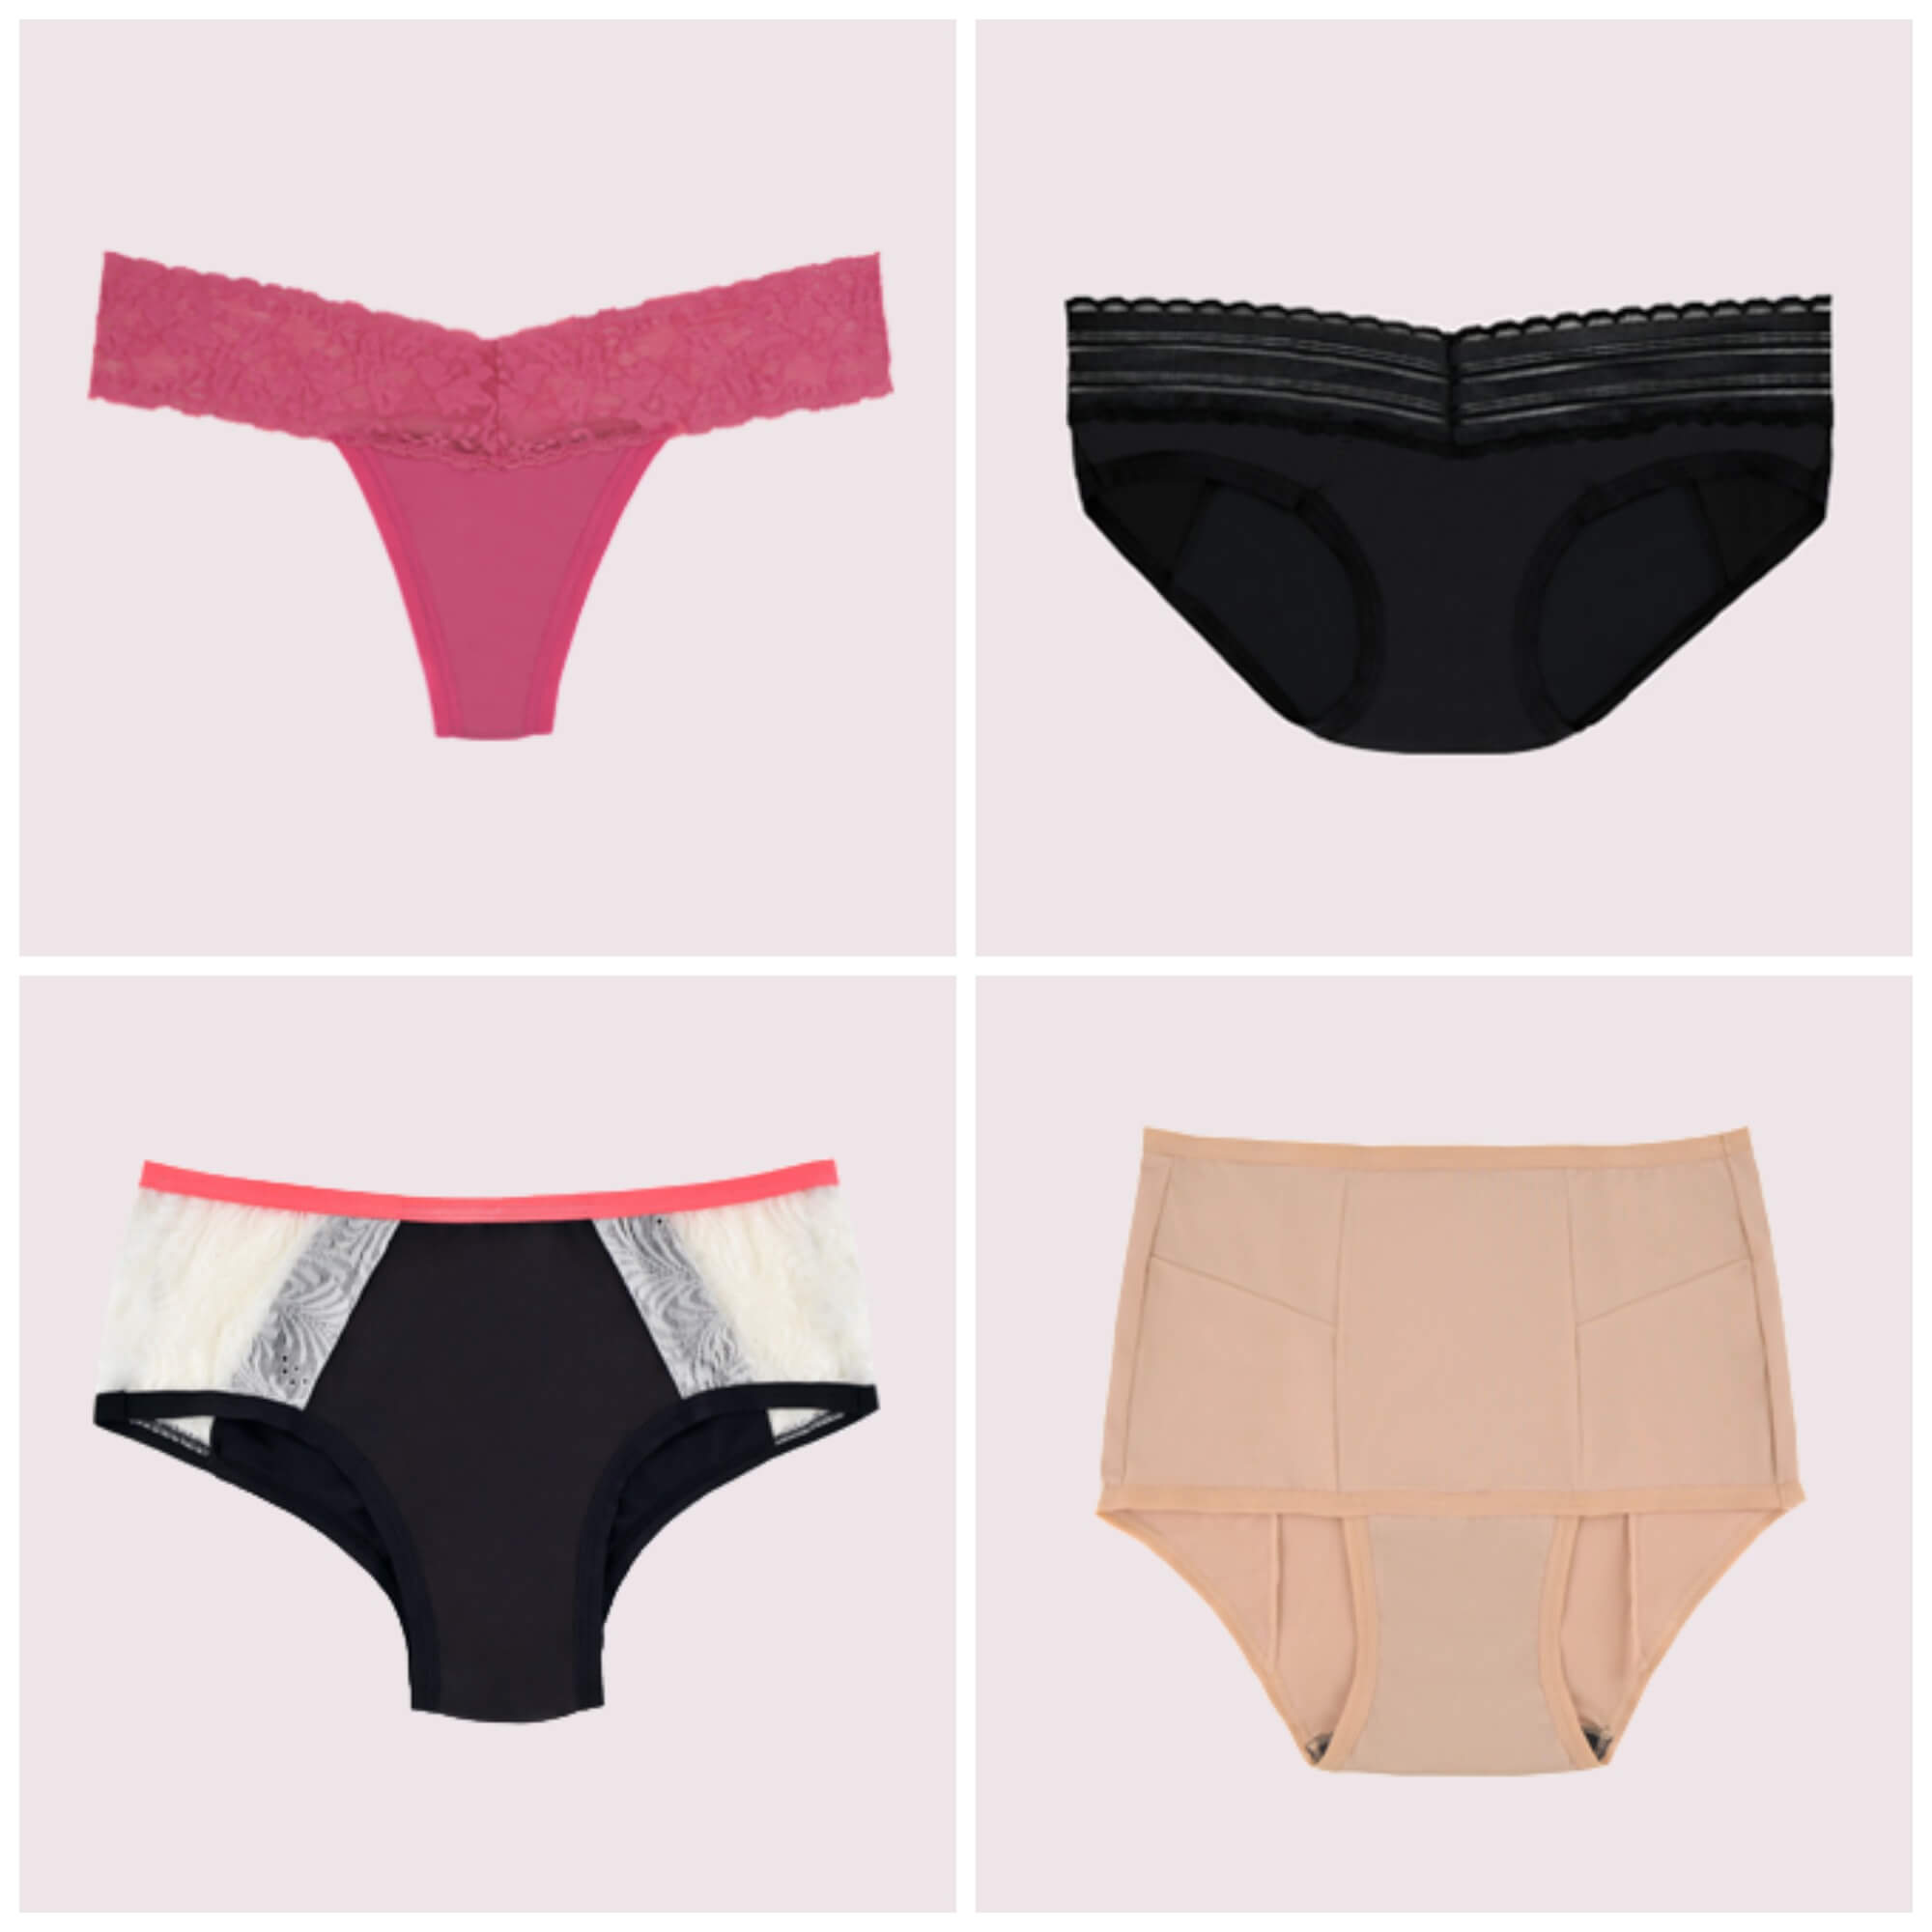 Trend Alert: Leakproof Underwear - Knickers for Your ...